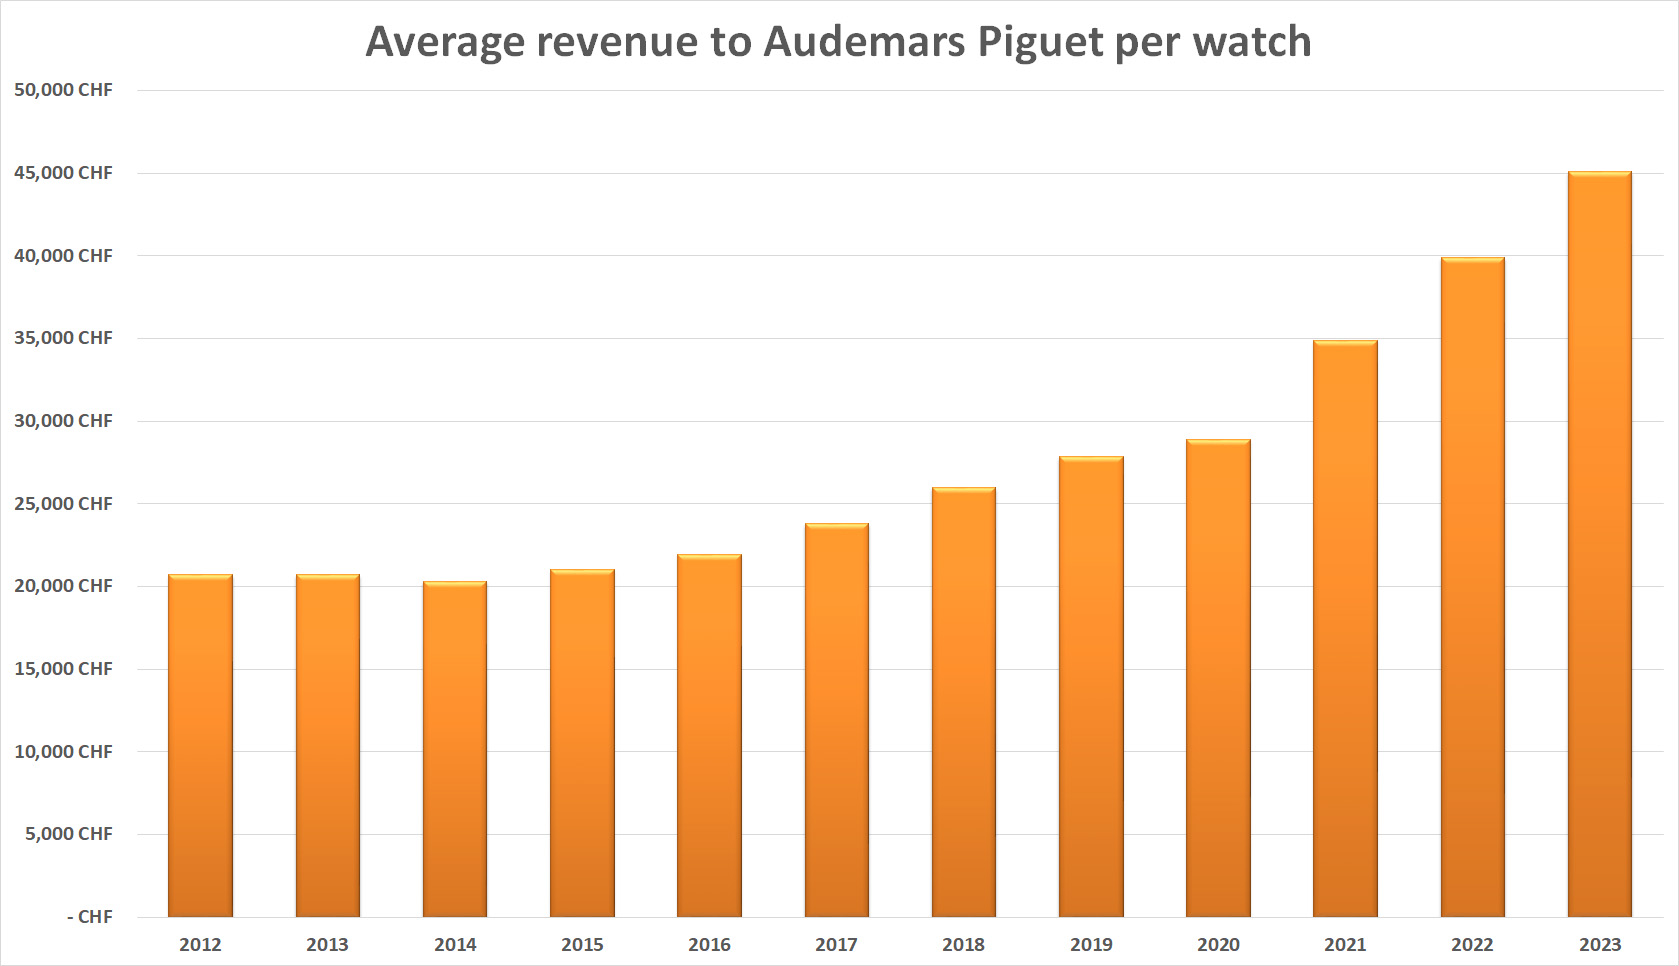 Audemars piguet revenue per watch